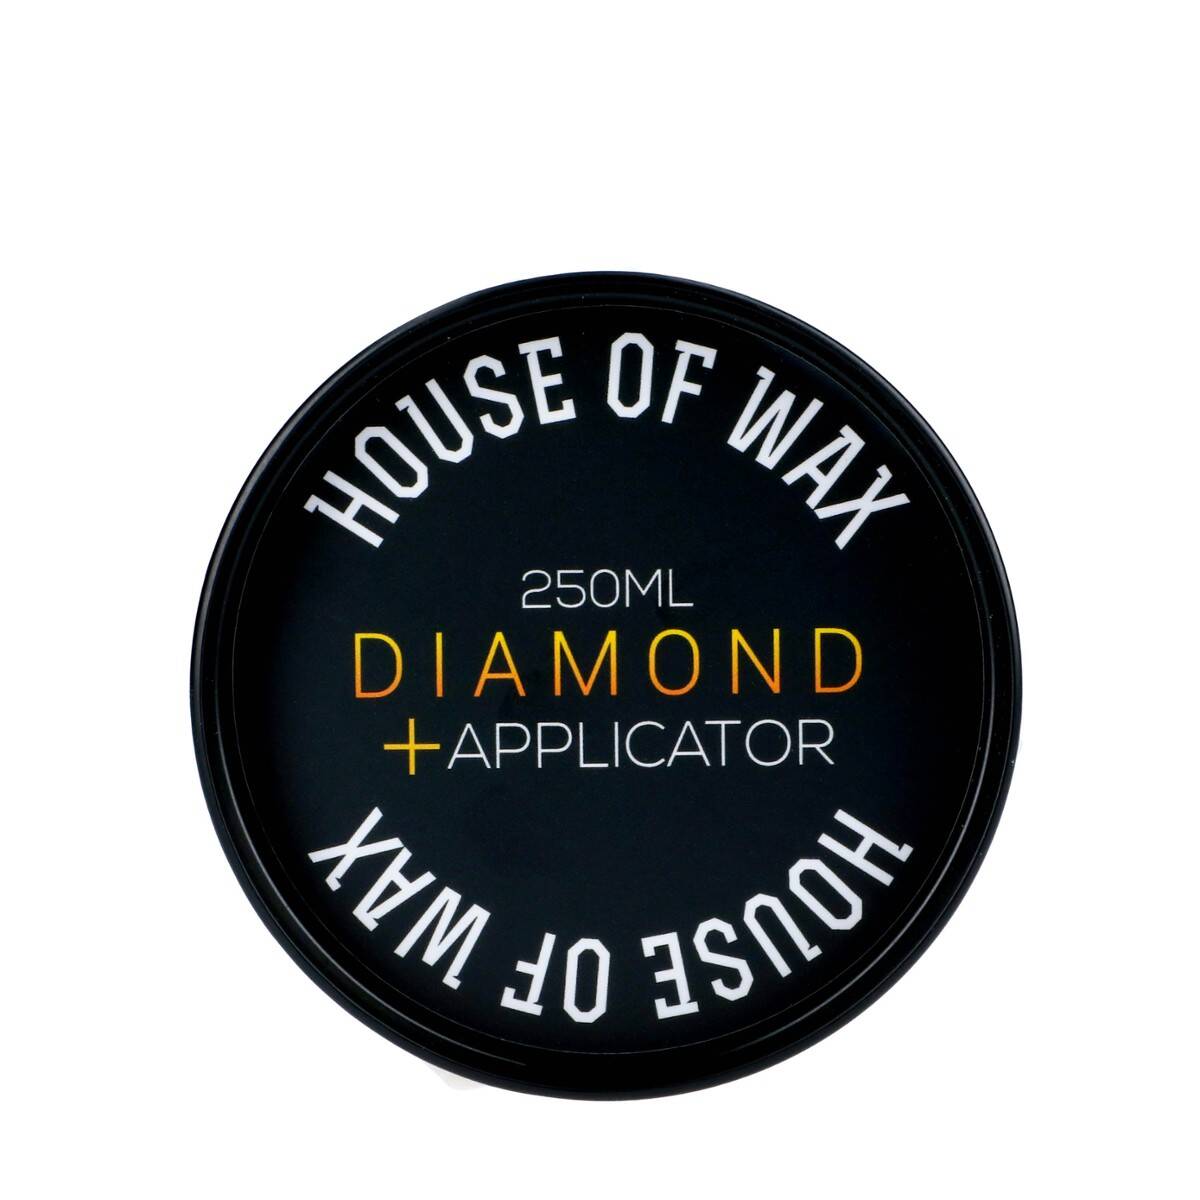 HOUSE OF WAX Diamond 250g Ekskluzywny Wosk Naturalny